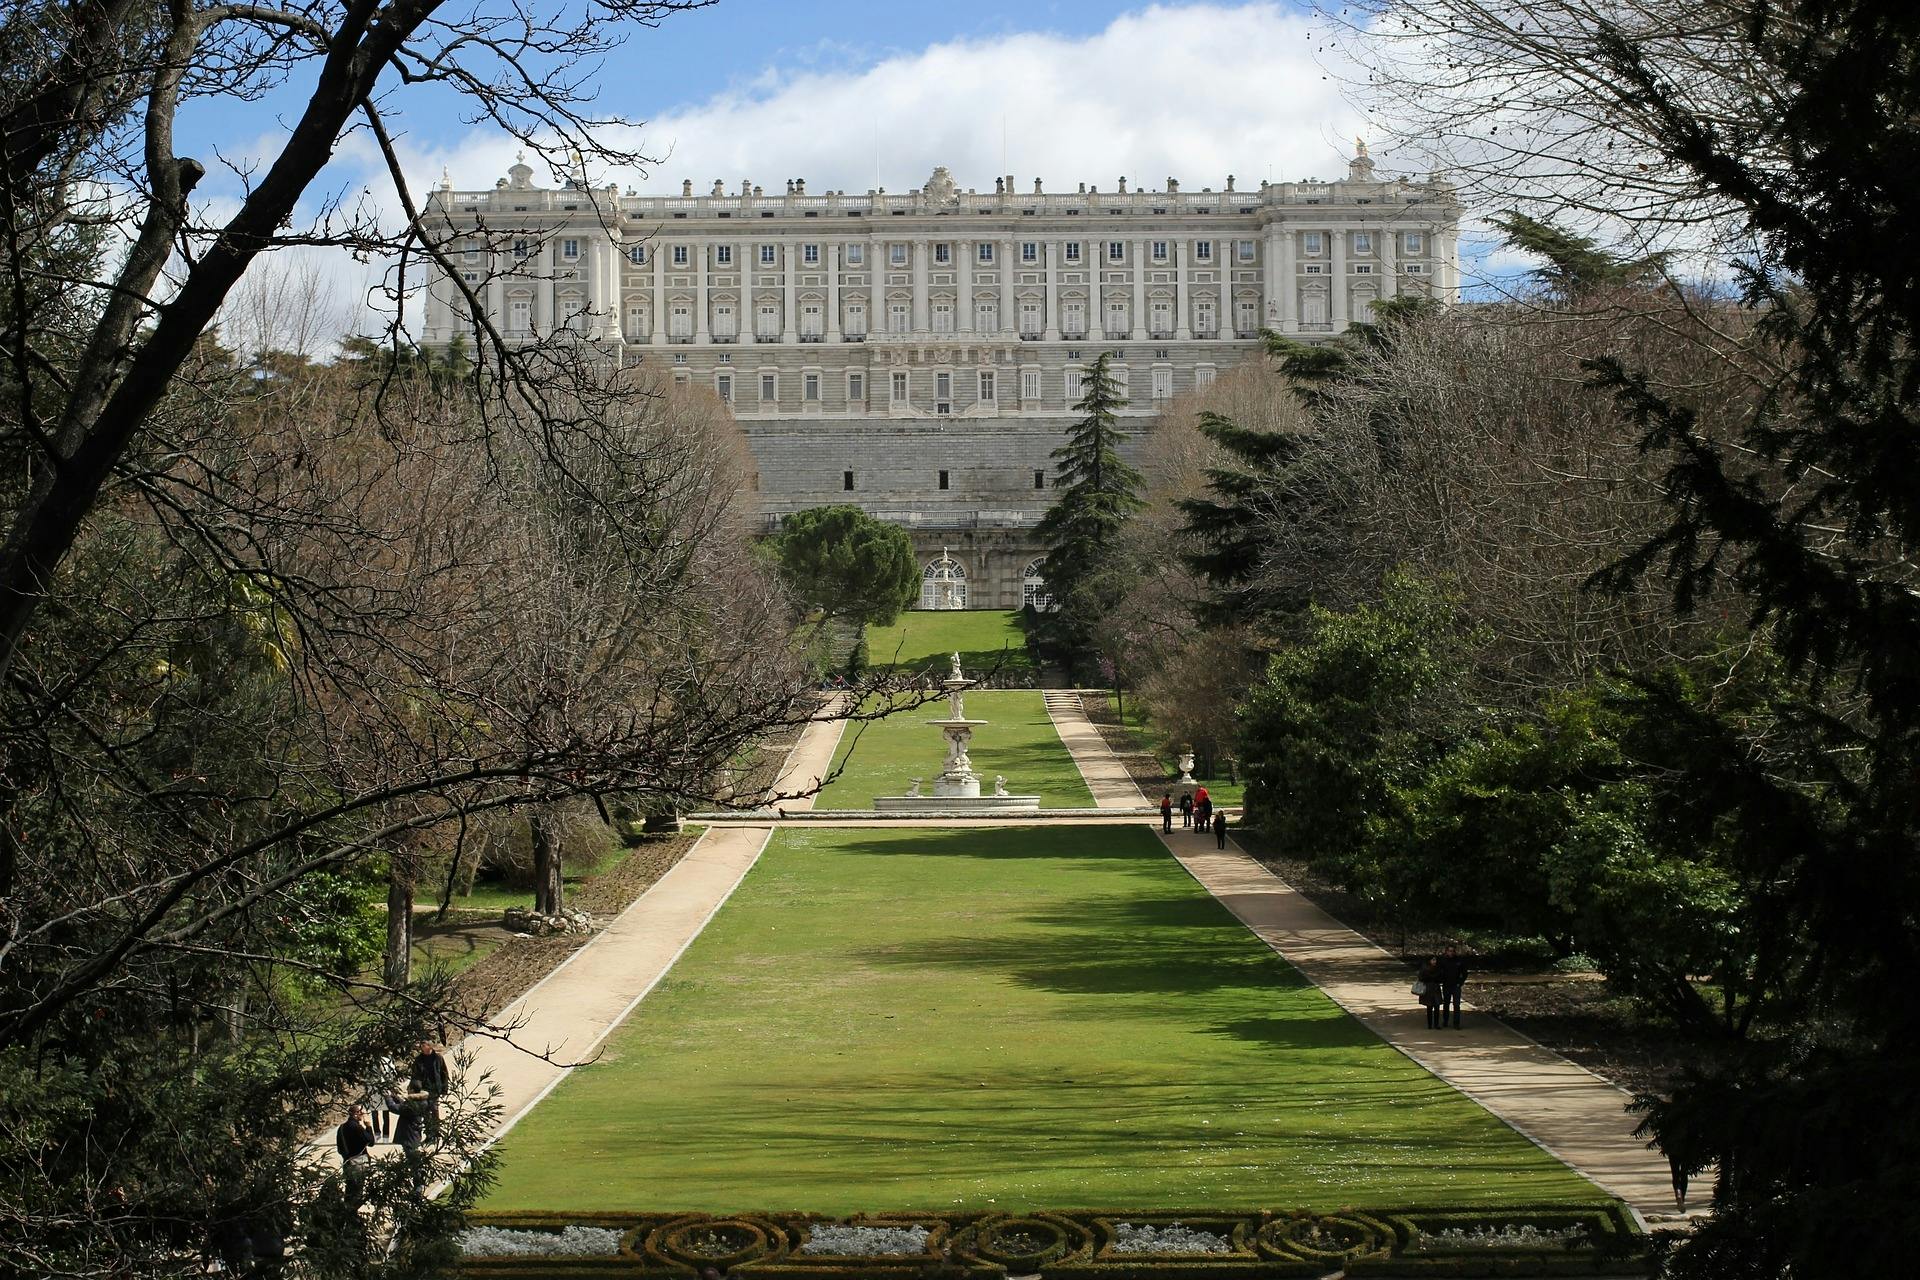 Visita guiada ao Palácio Real e à Catedral da Almudena